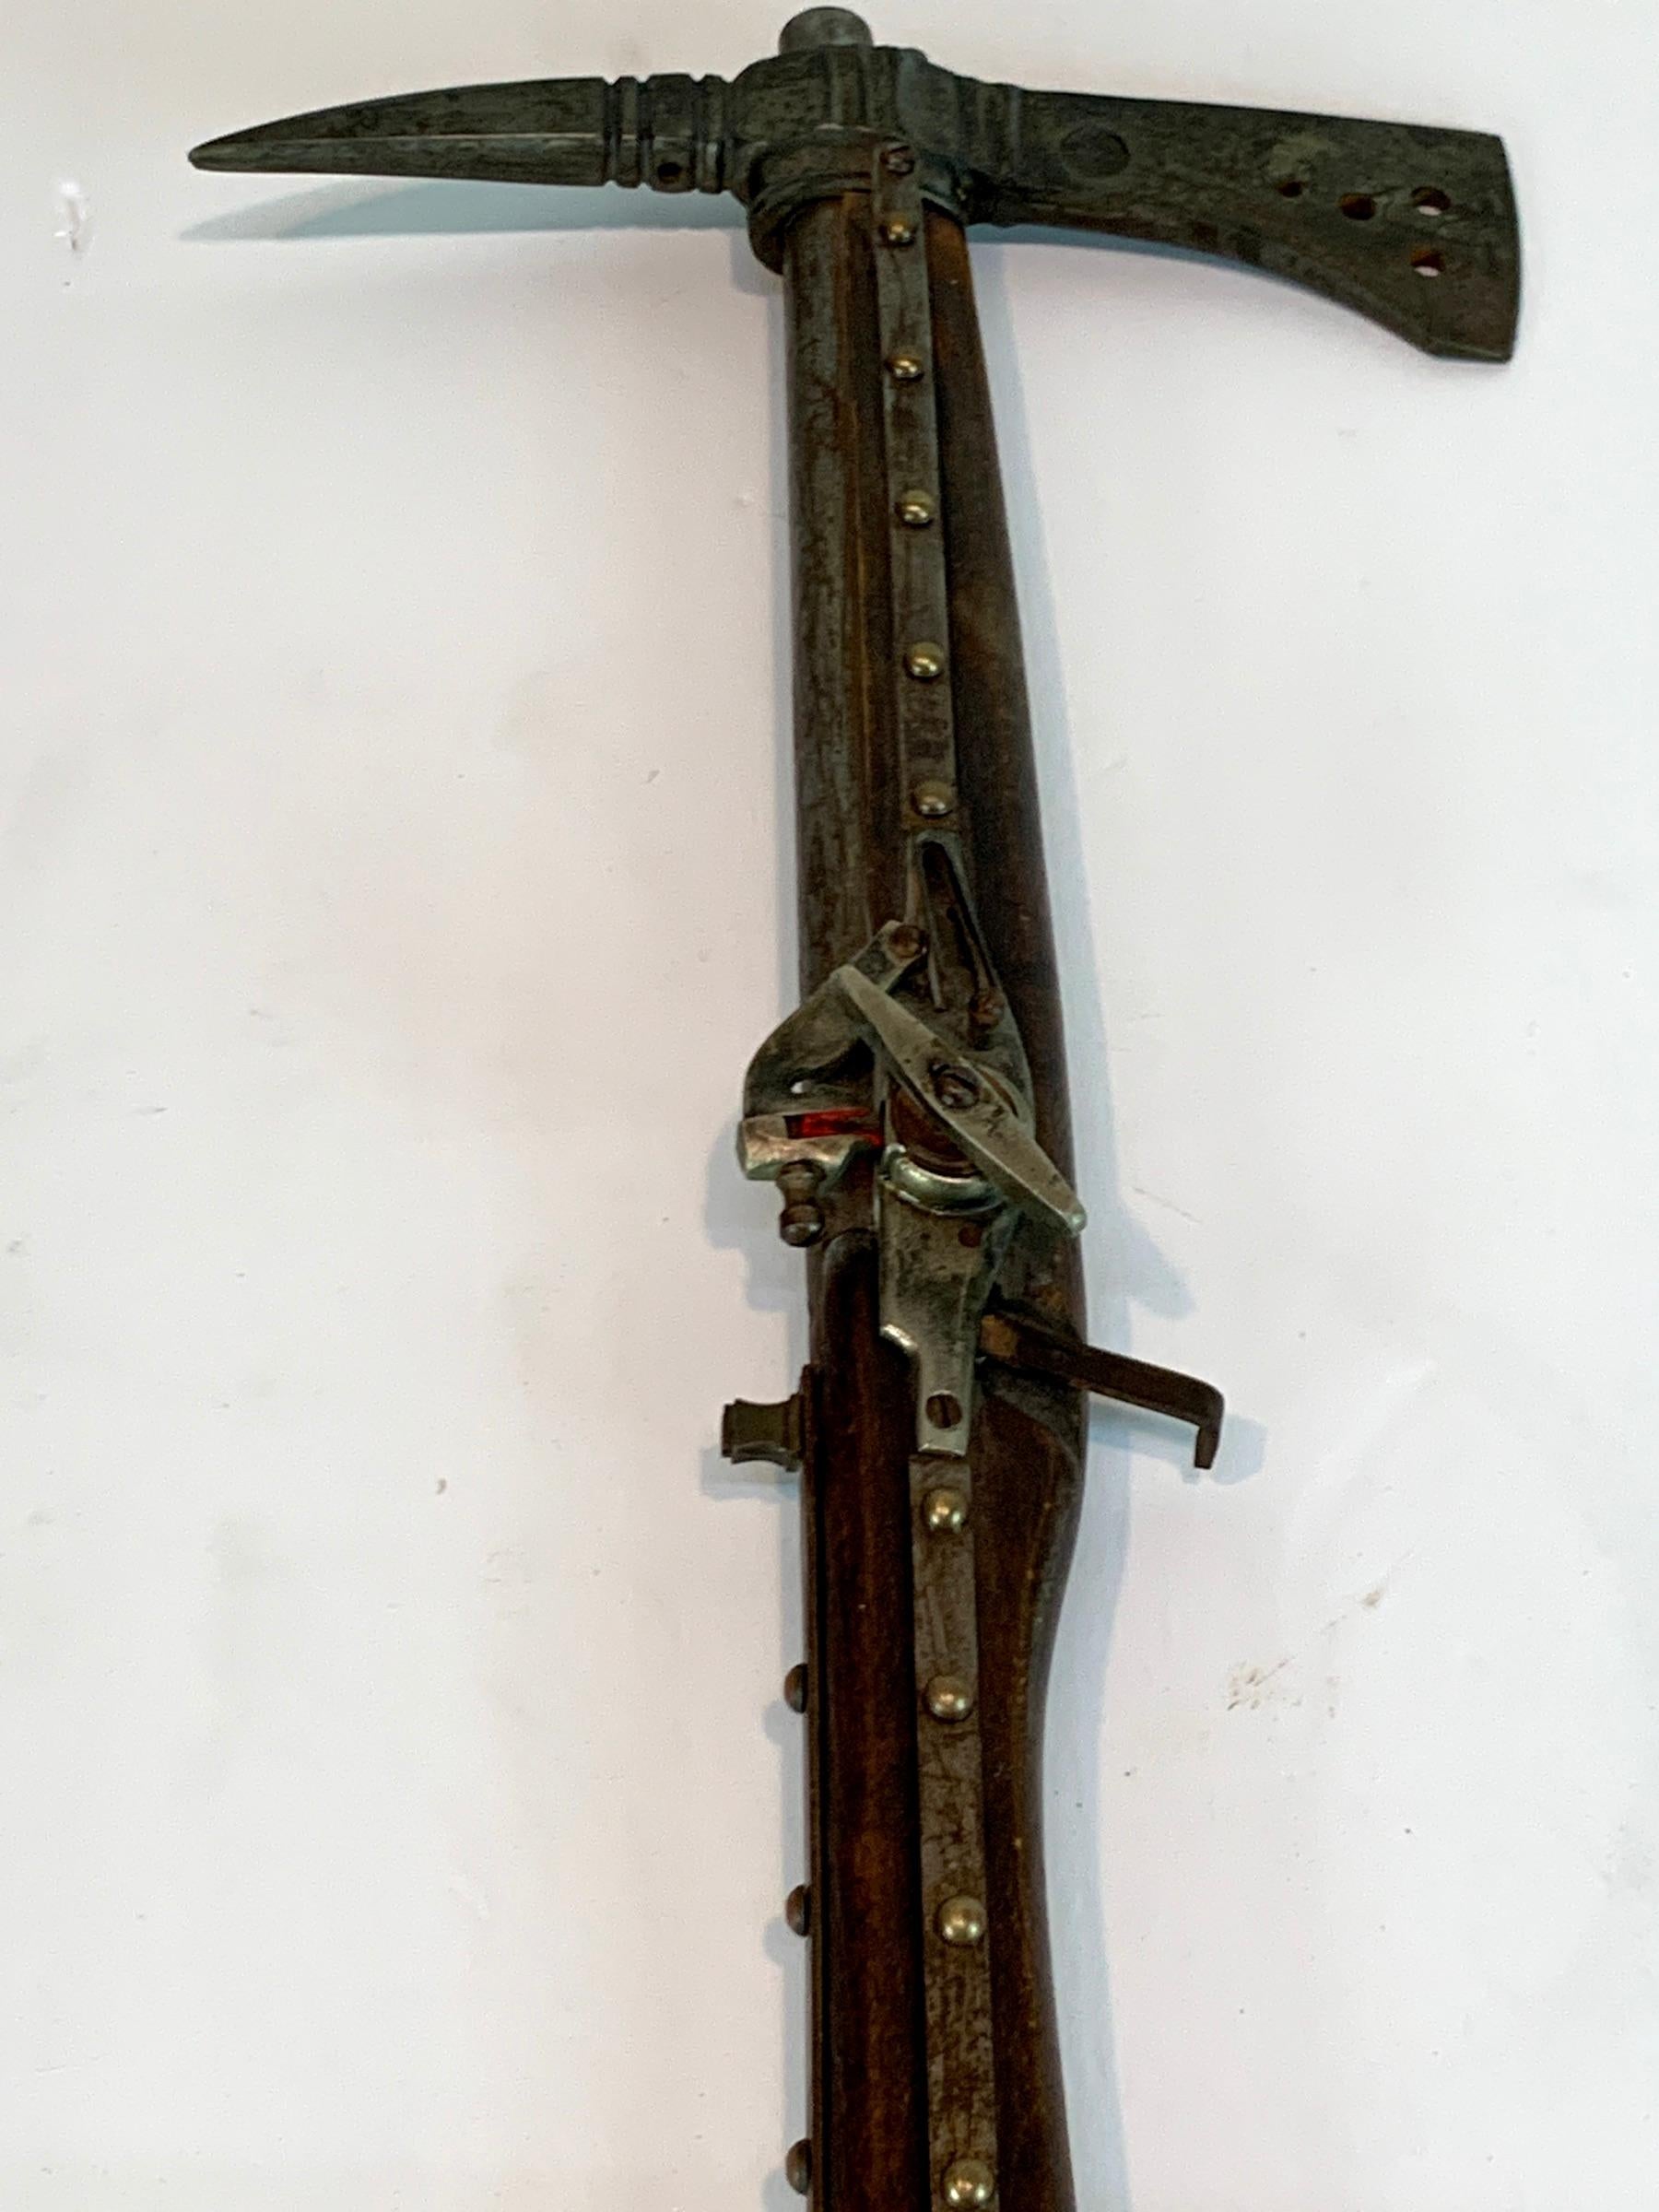 Metal Model of a European 18th Century Flintlock Pistol with Axe Handle